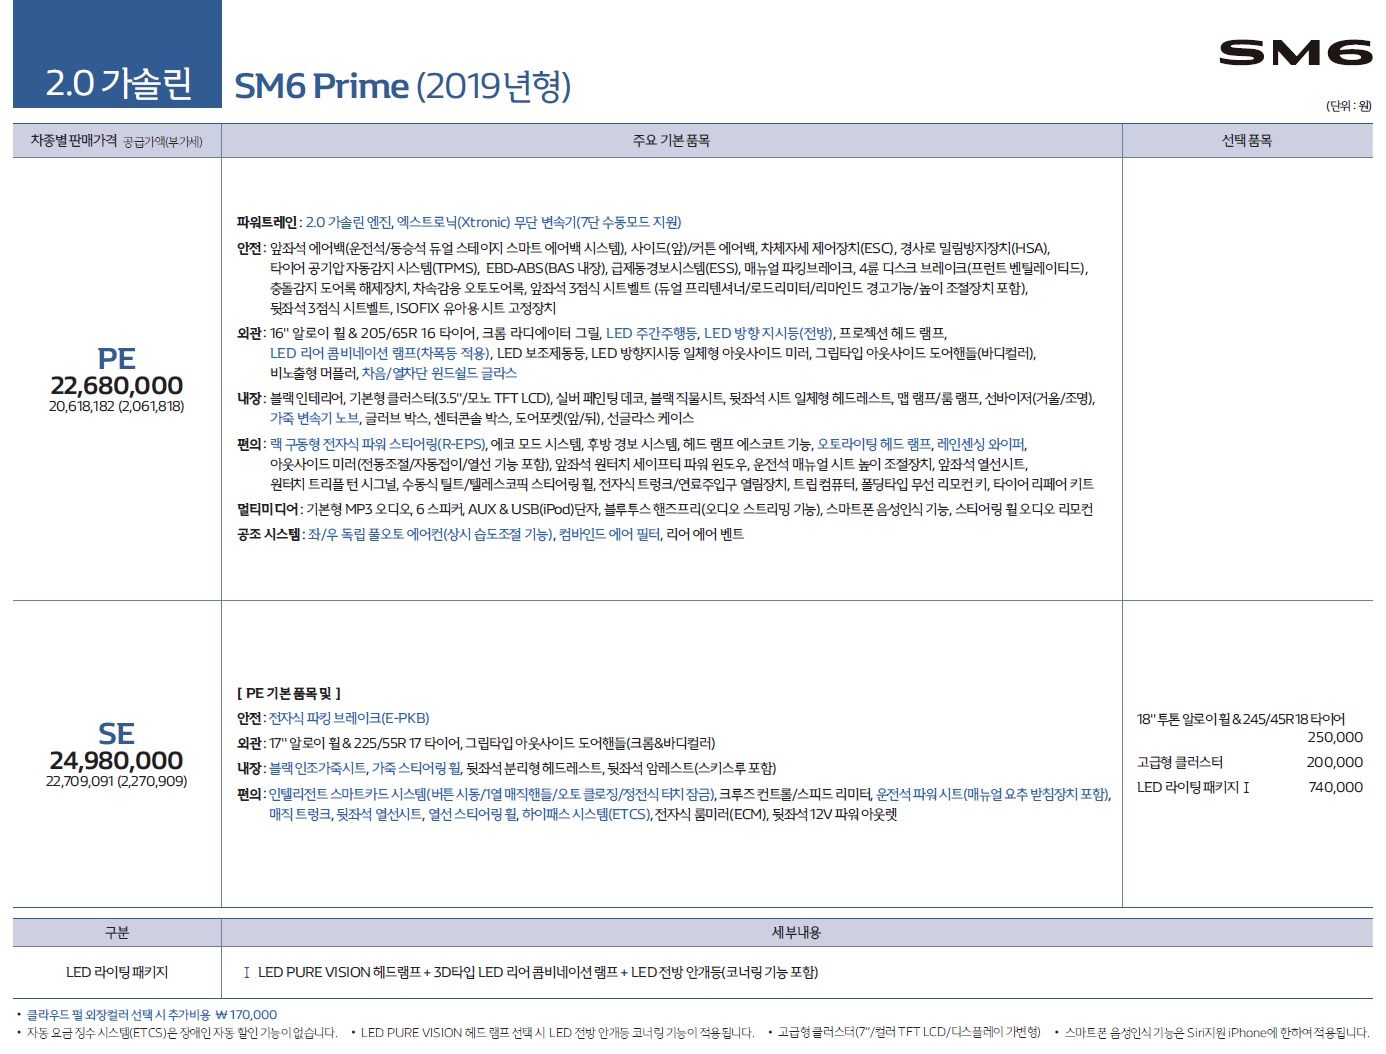 SM6 가격표 - 2020년형 (2019년 07월) -2.jpg